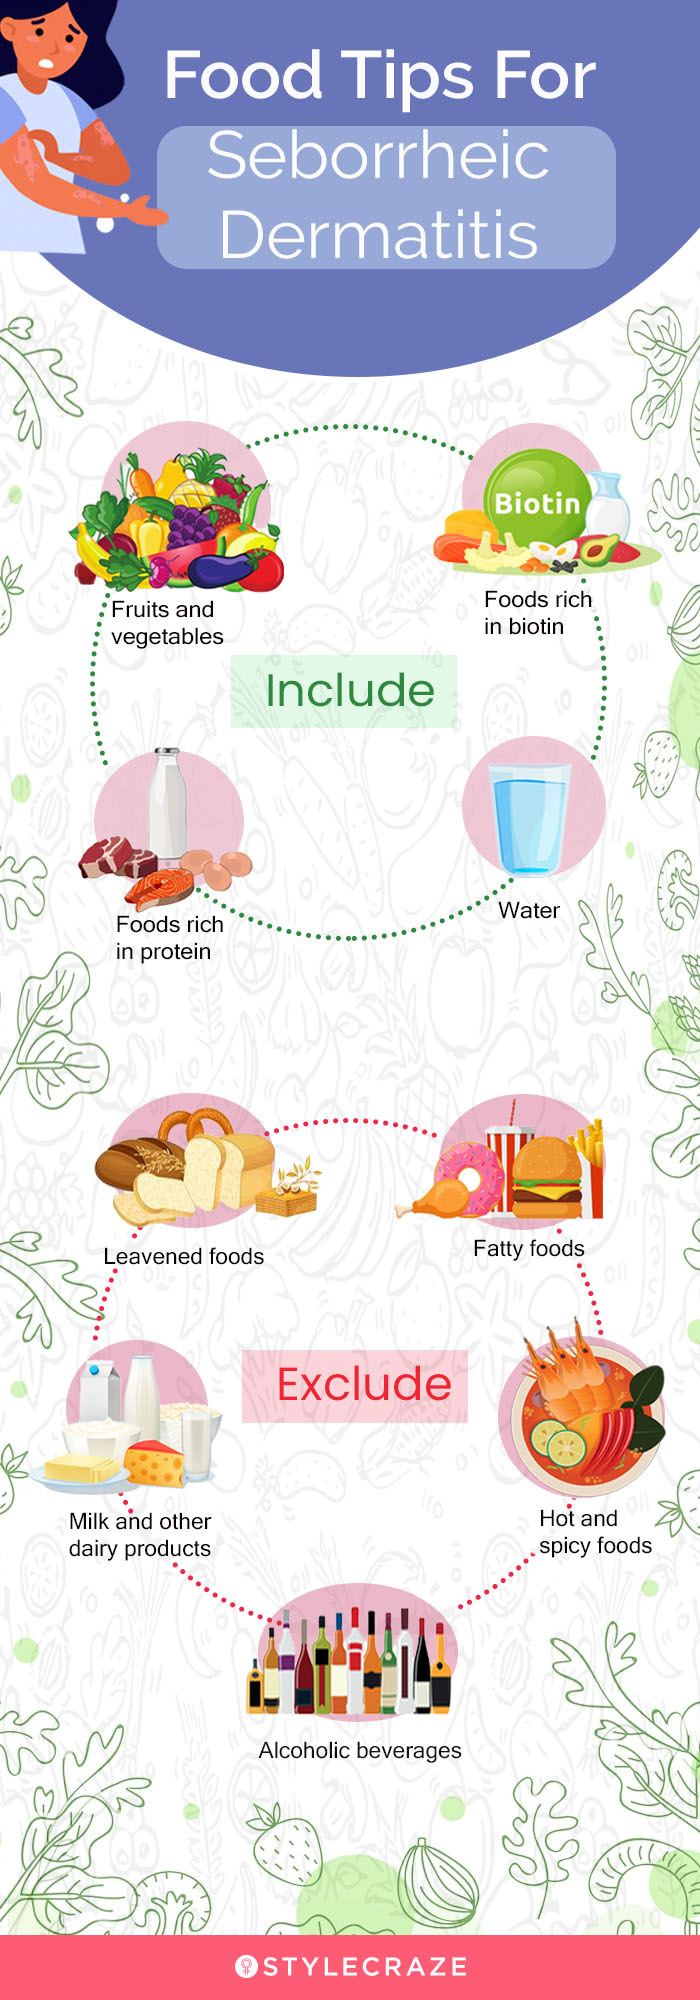 food tips for seborrheic dermatitis [infographic]